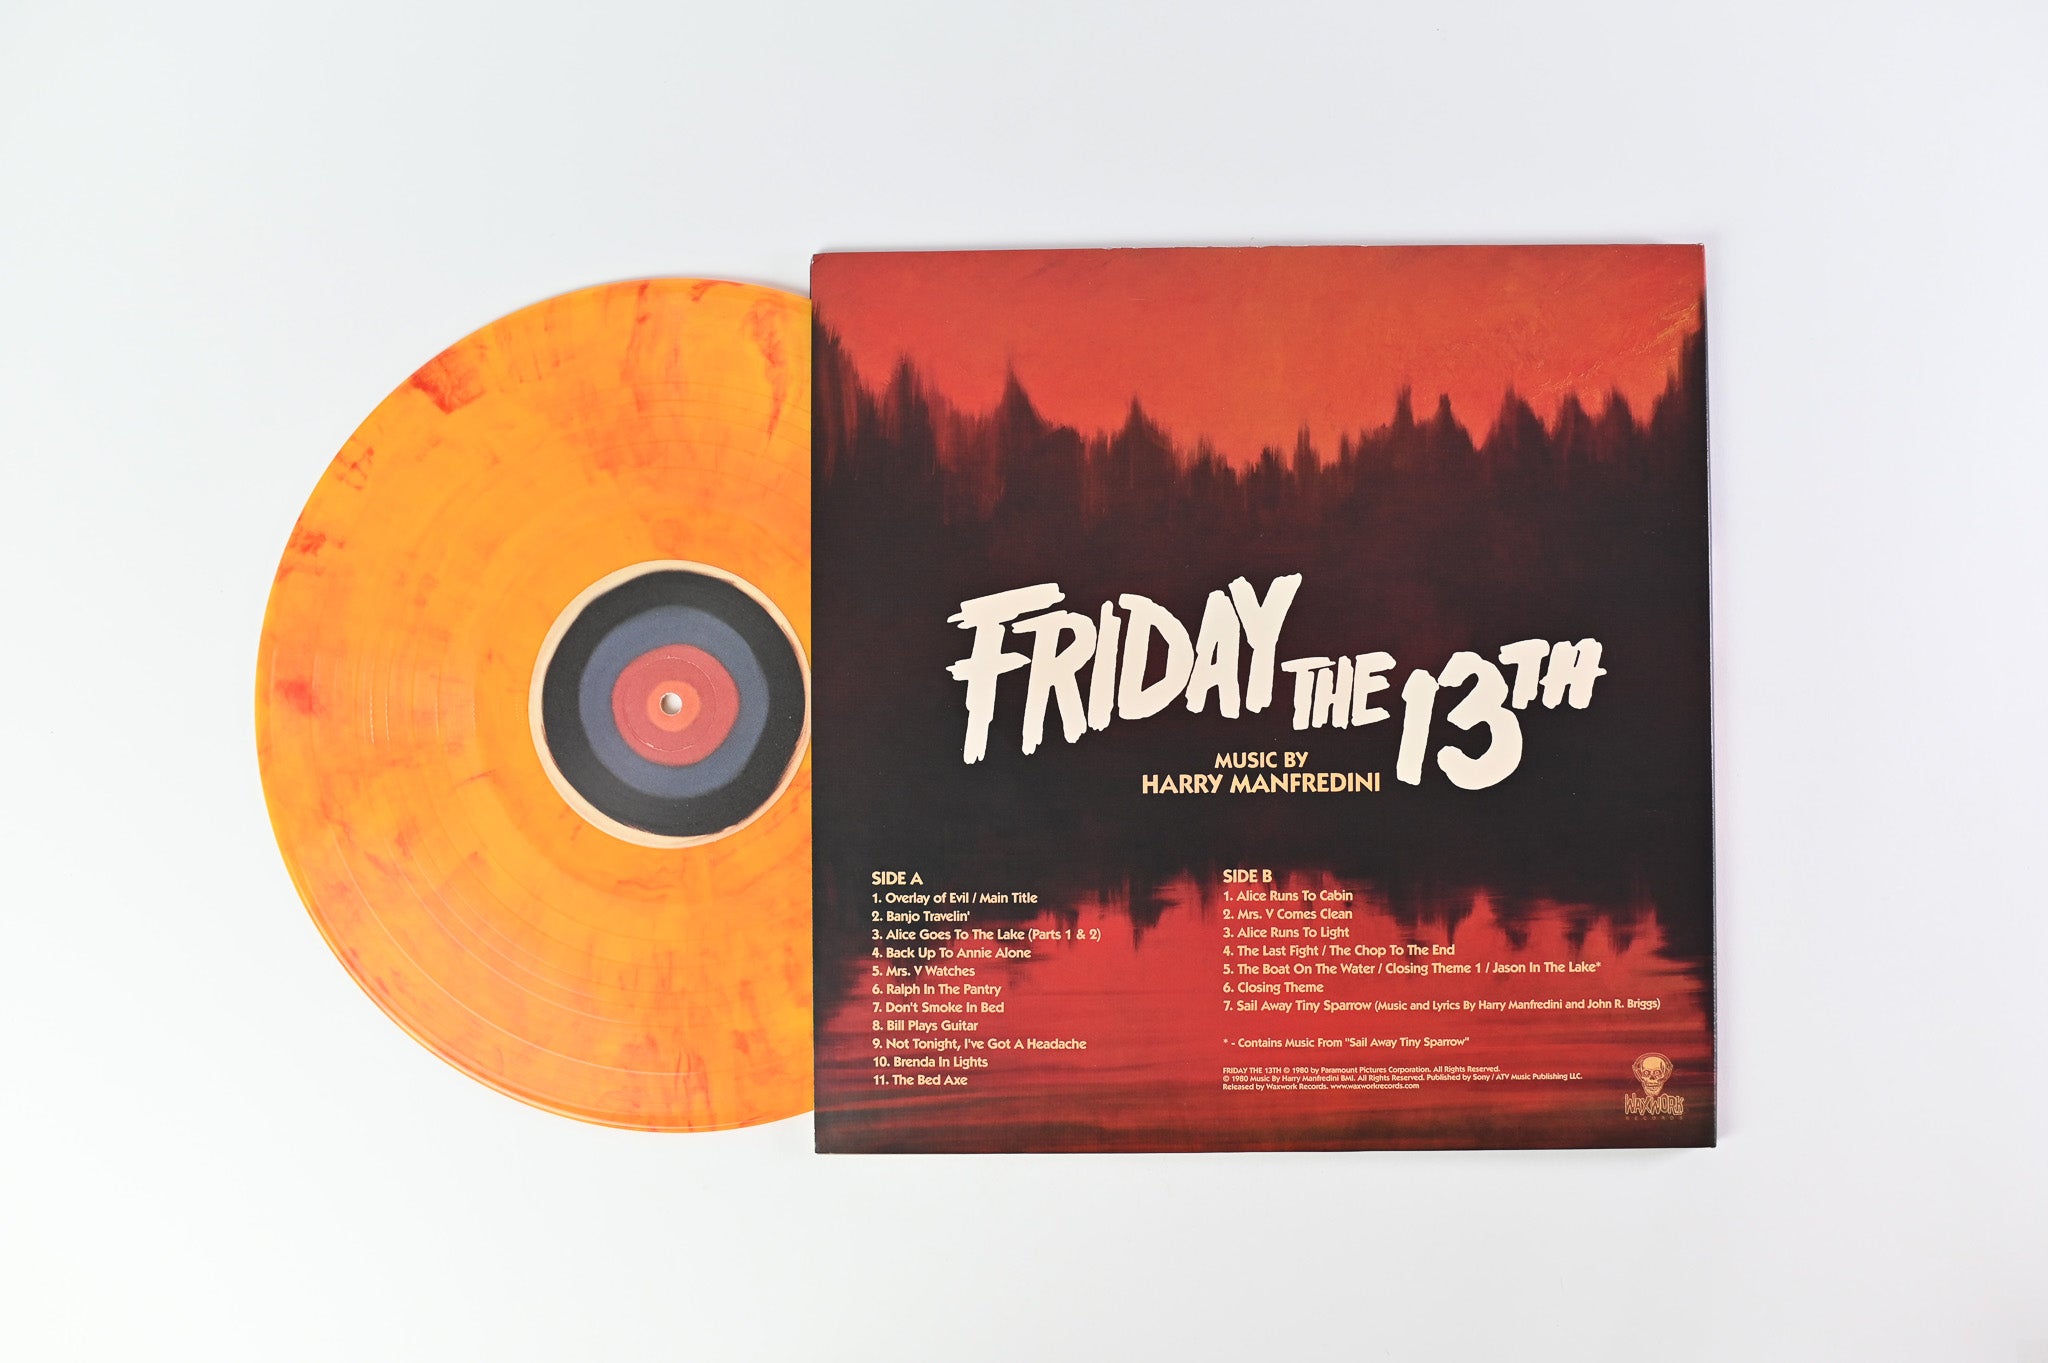 Harry Manfredini - Friday The 13th (Original Motion Picture Score) on Waxwork Ltd Campfire Vinyl Reissue